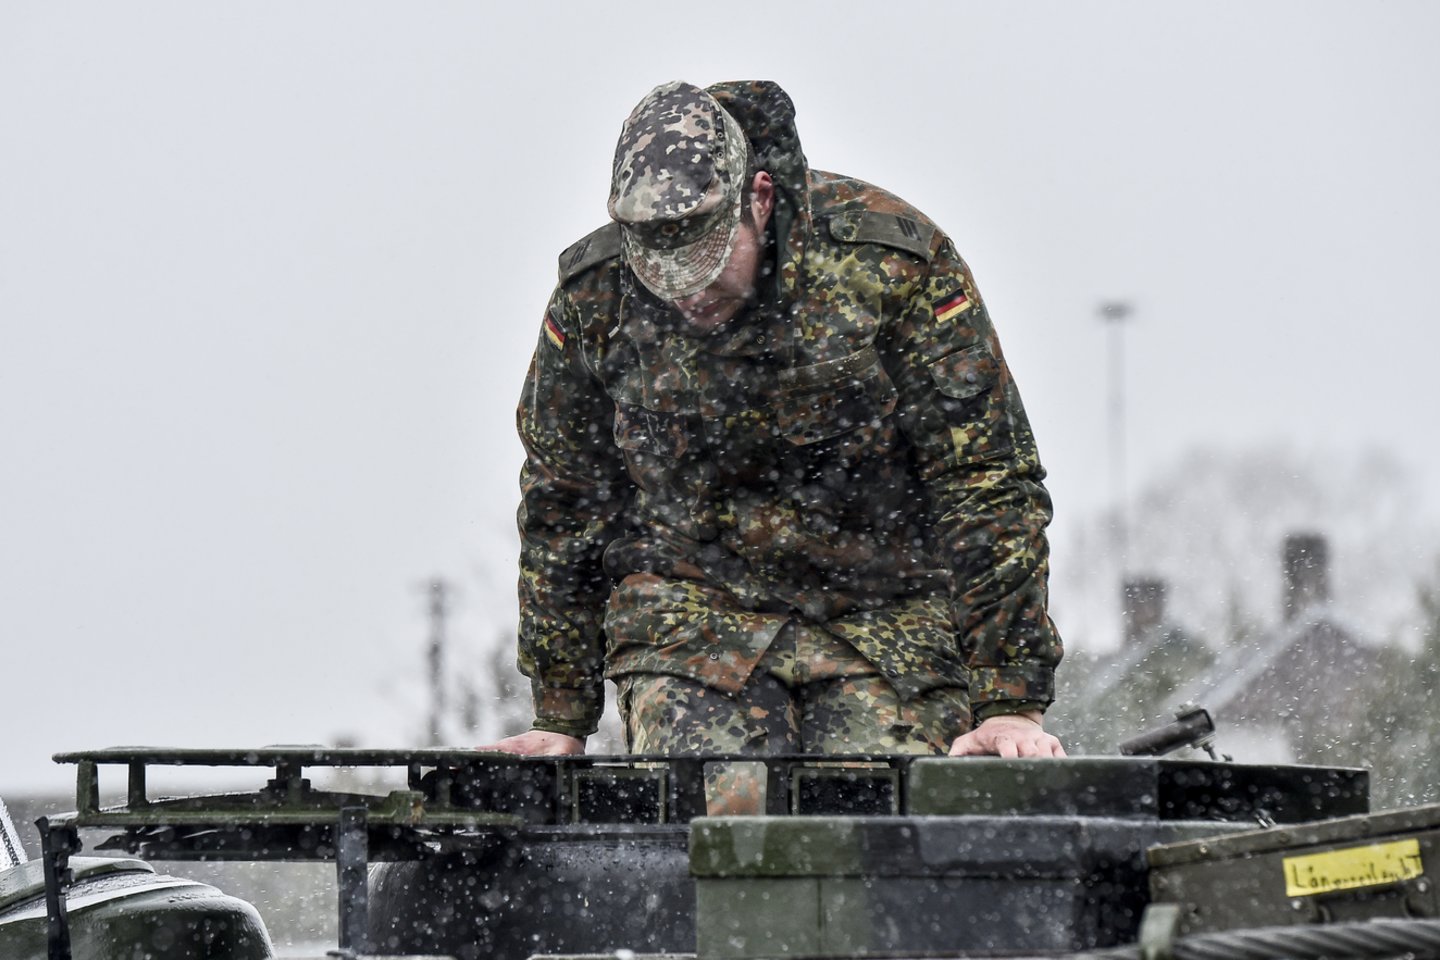 NATO karinė technika iš Vokietijos,Šeštokų gel.stotyje<br>V.Ščiavinsko nuotr.